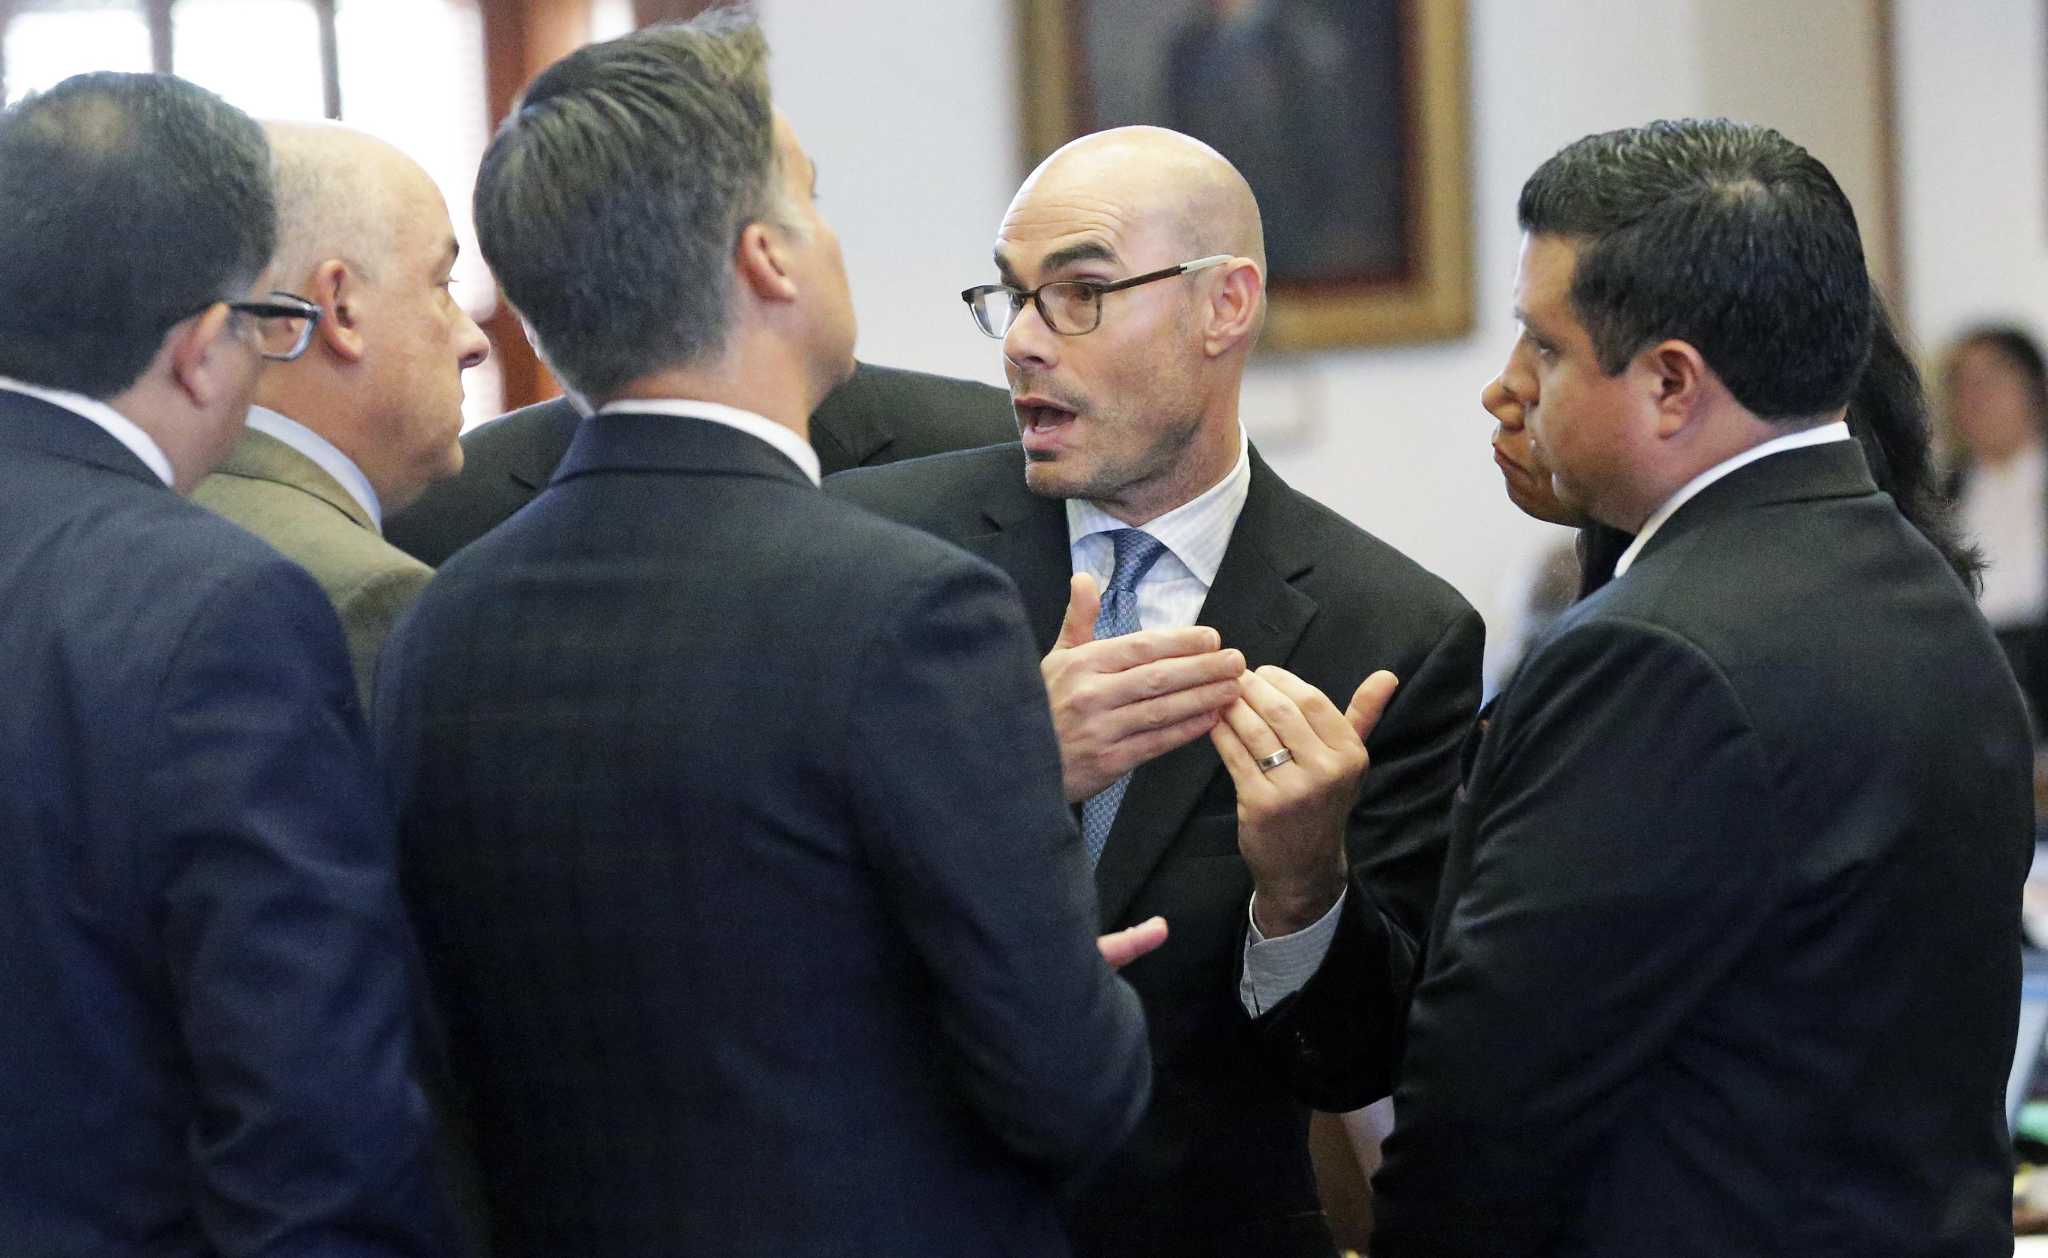 Controversial Texas tax bill moves to House floor, where critics fear